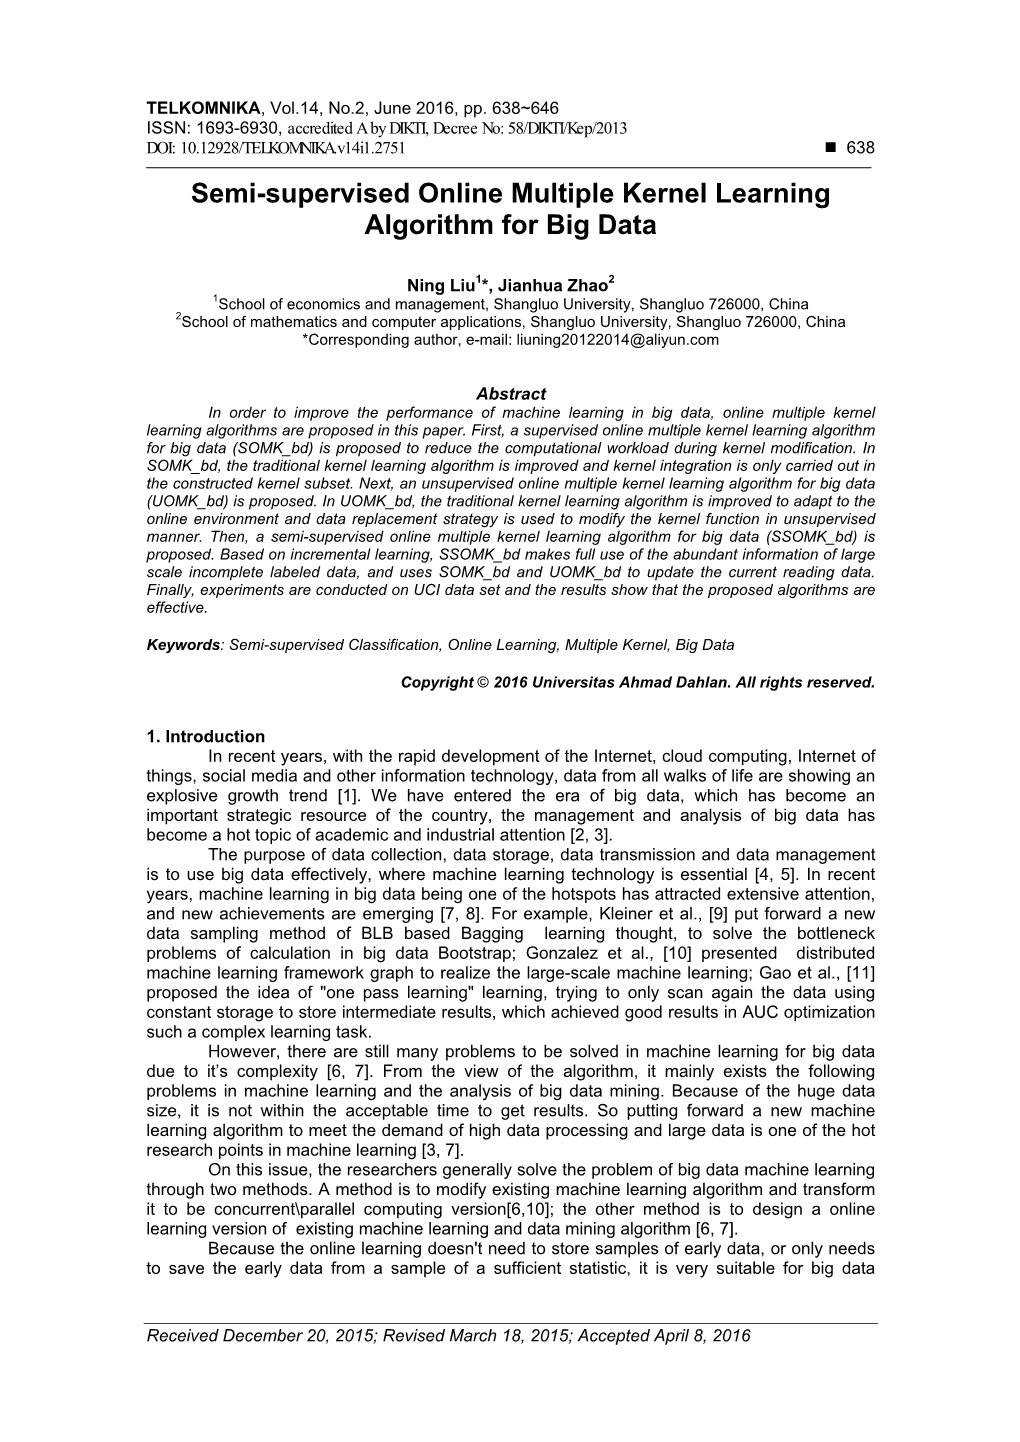 Semi-Supervised Online Multiple Kernel Learning Algorithm for Big Data